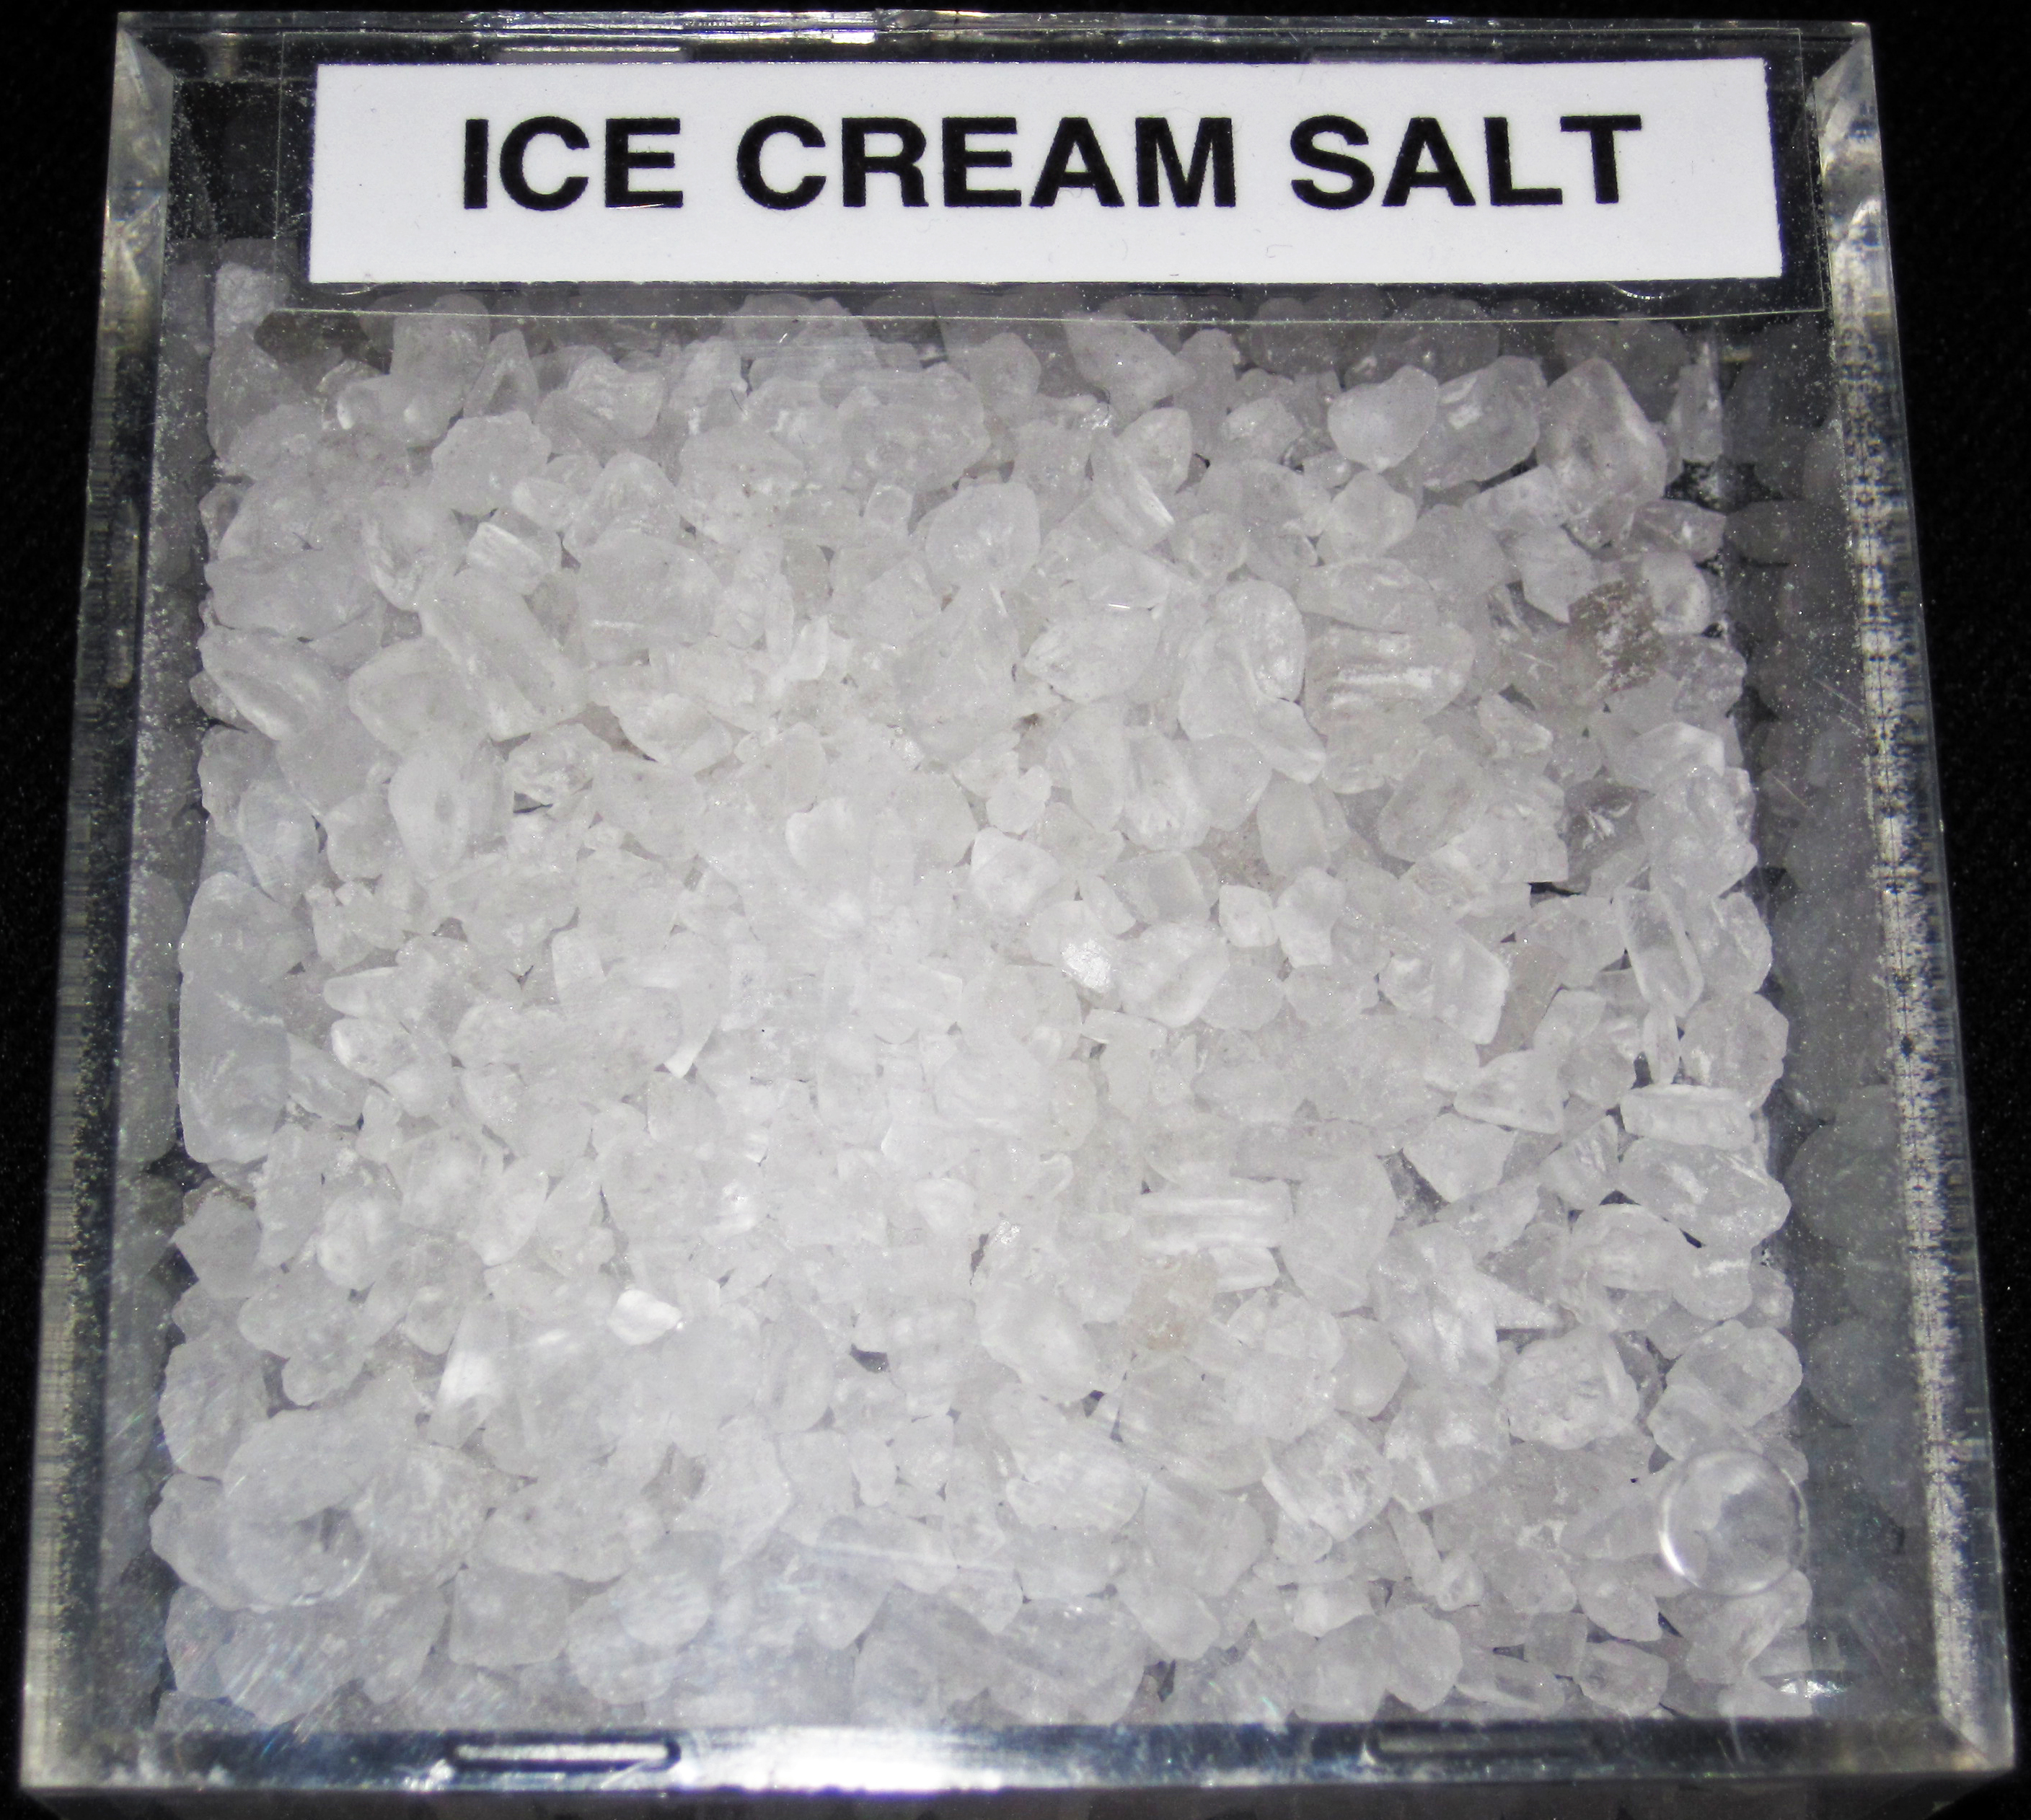 rock salt for ice cream